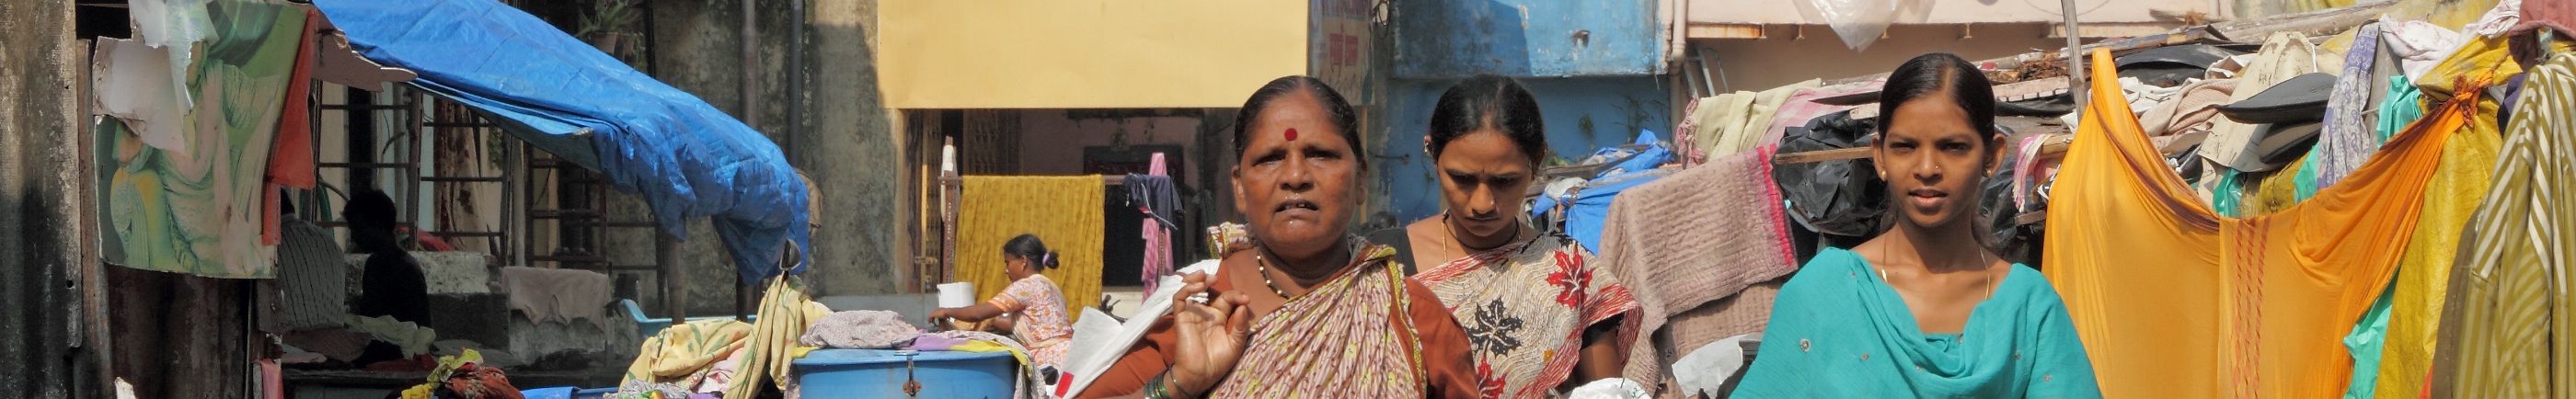 women walking in mumbai slum